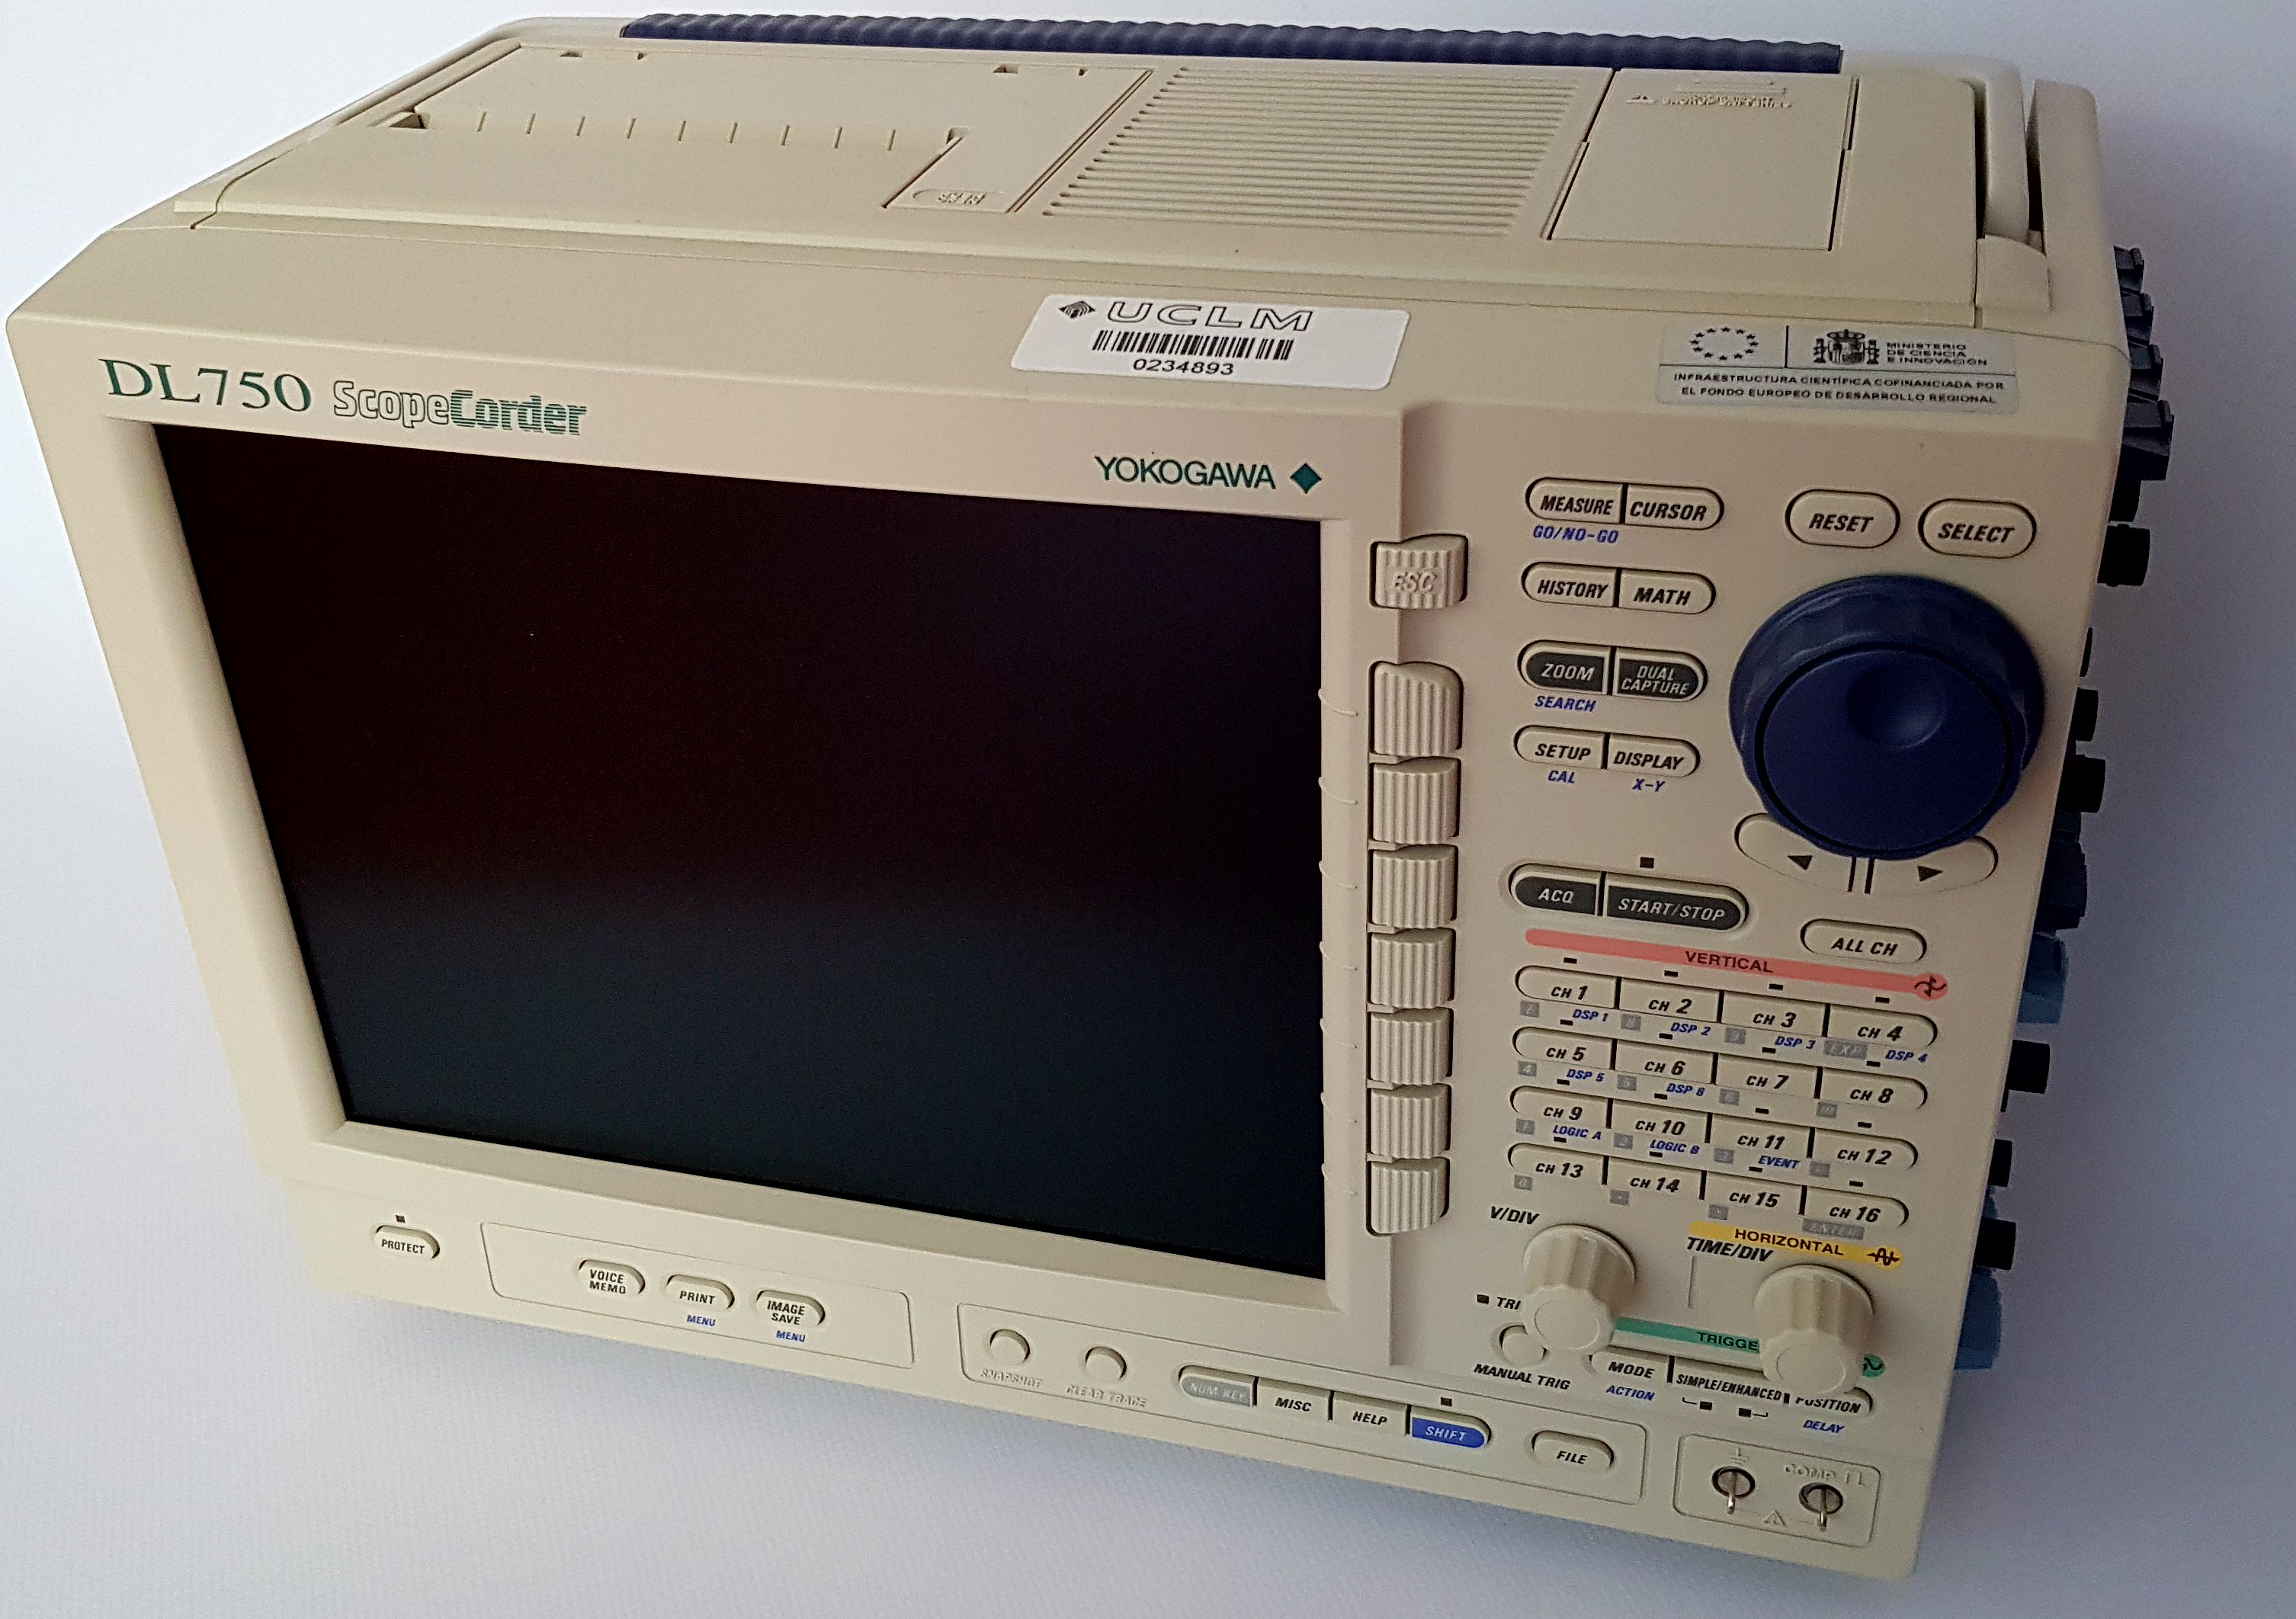 Scope recorder, DL750P, Yokogawa